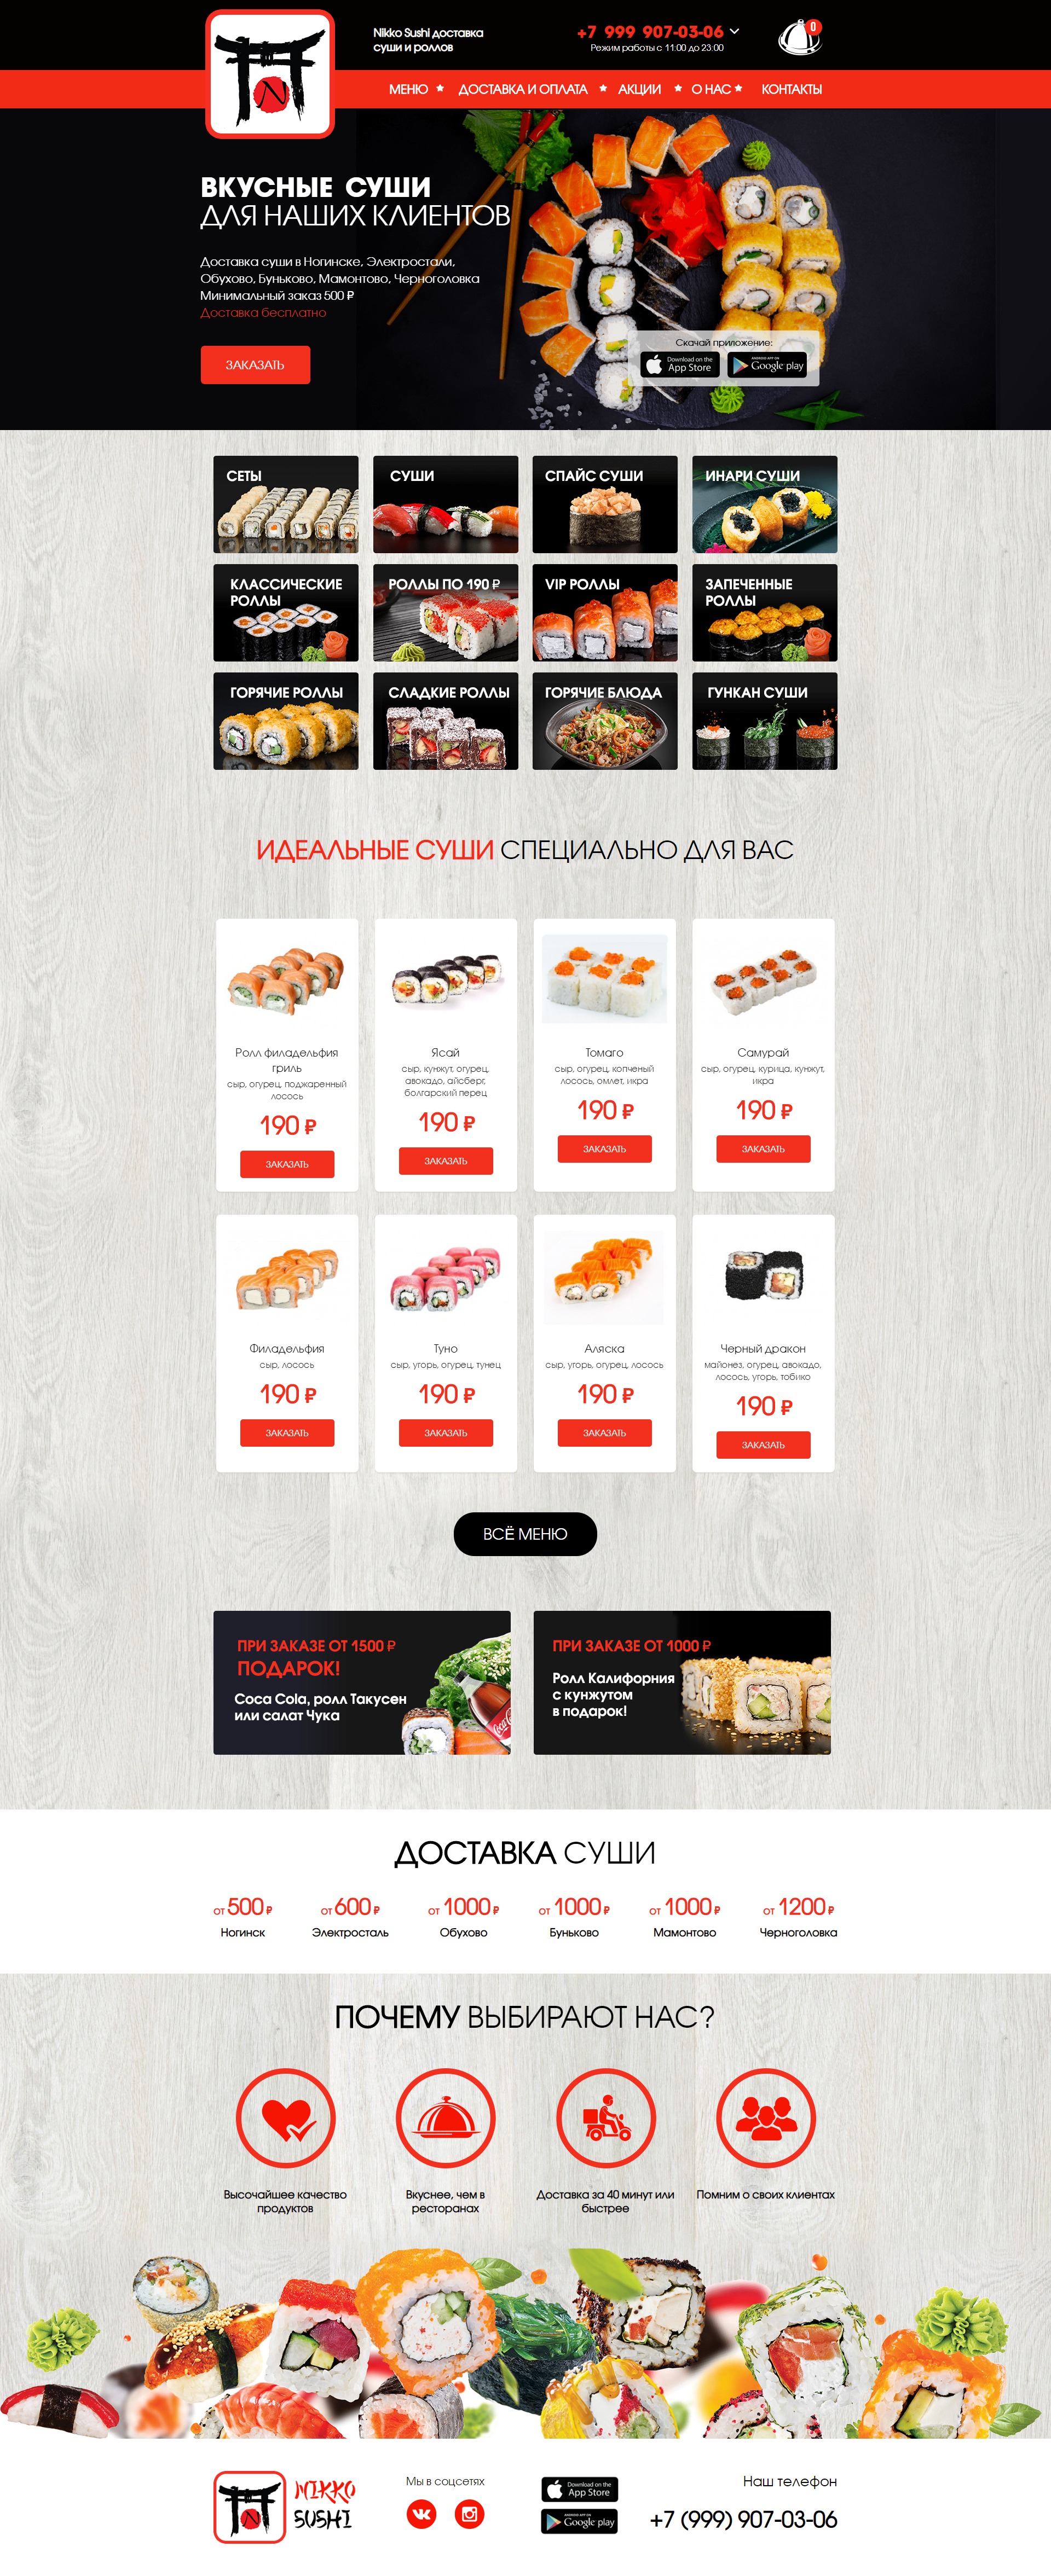 Создание сайта nikko-sushi.ru